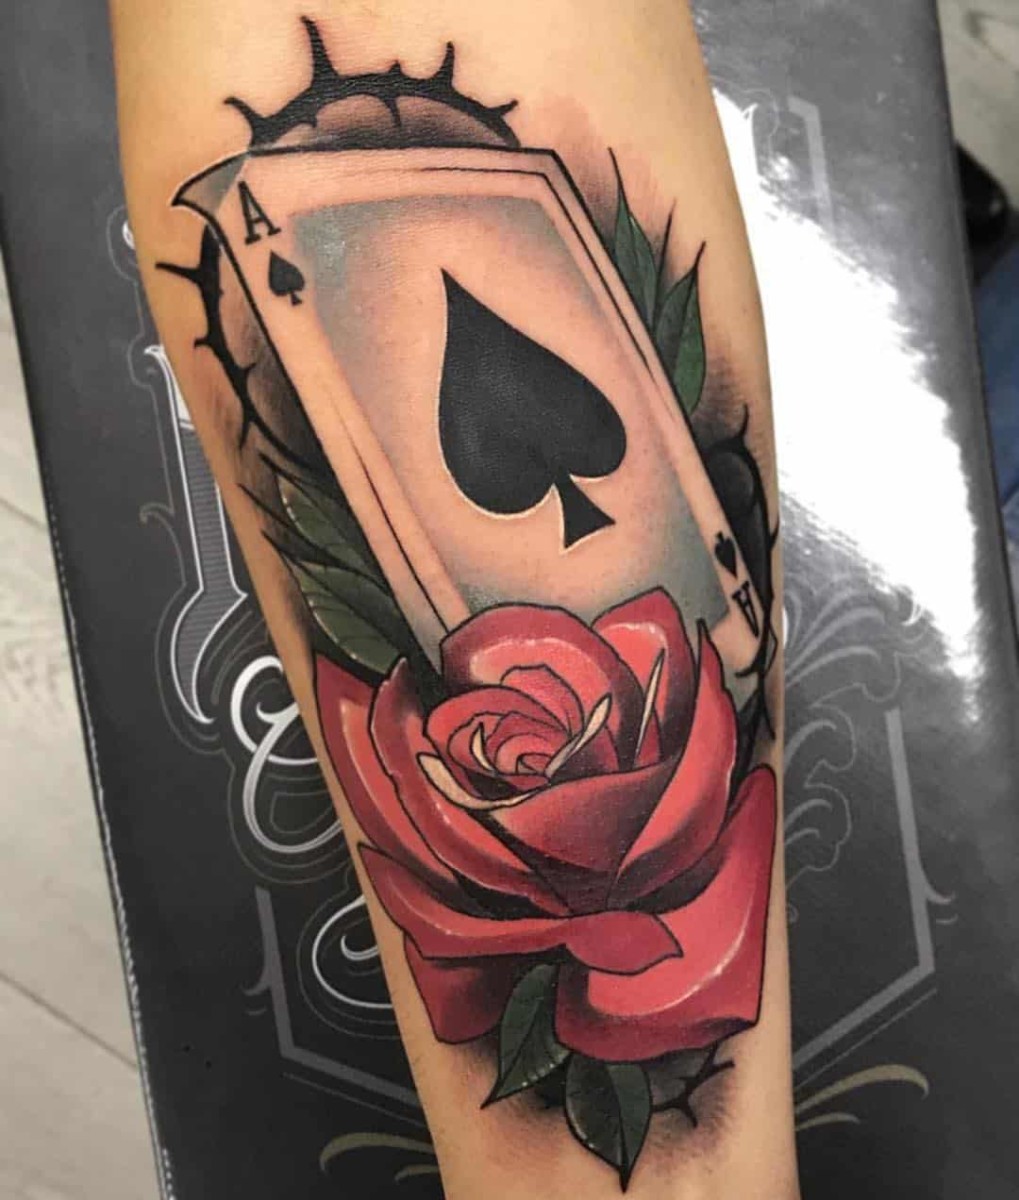 ace-of-pades-tattoo-rose-by-@estepa_tattoo